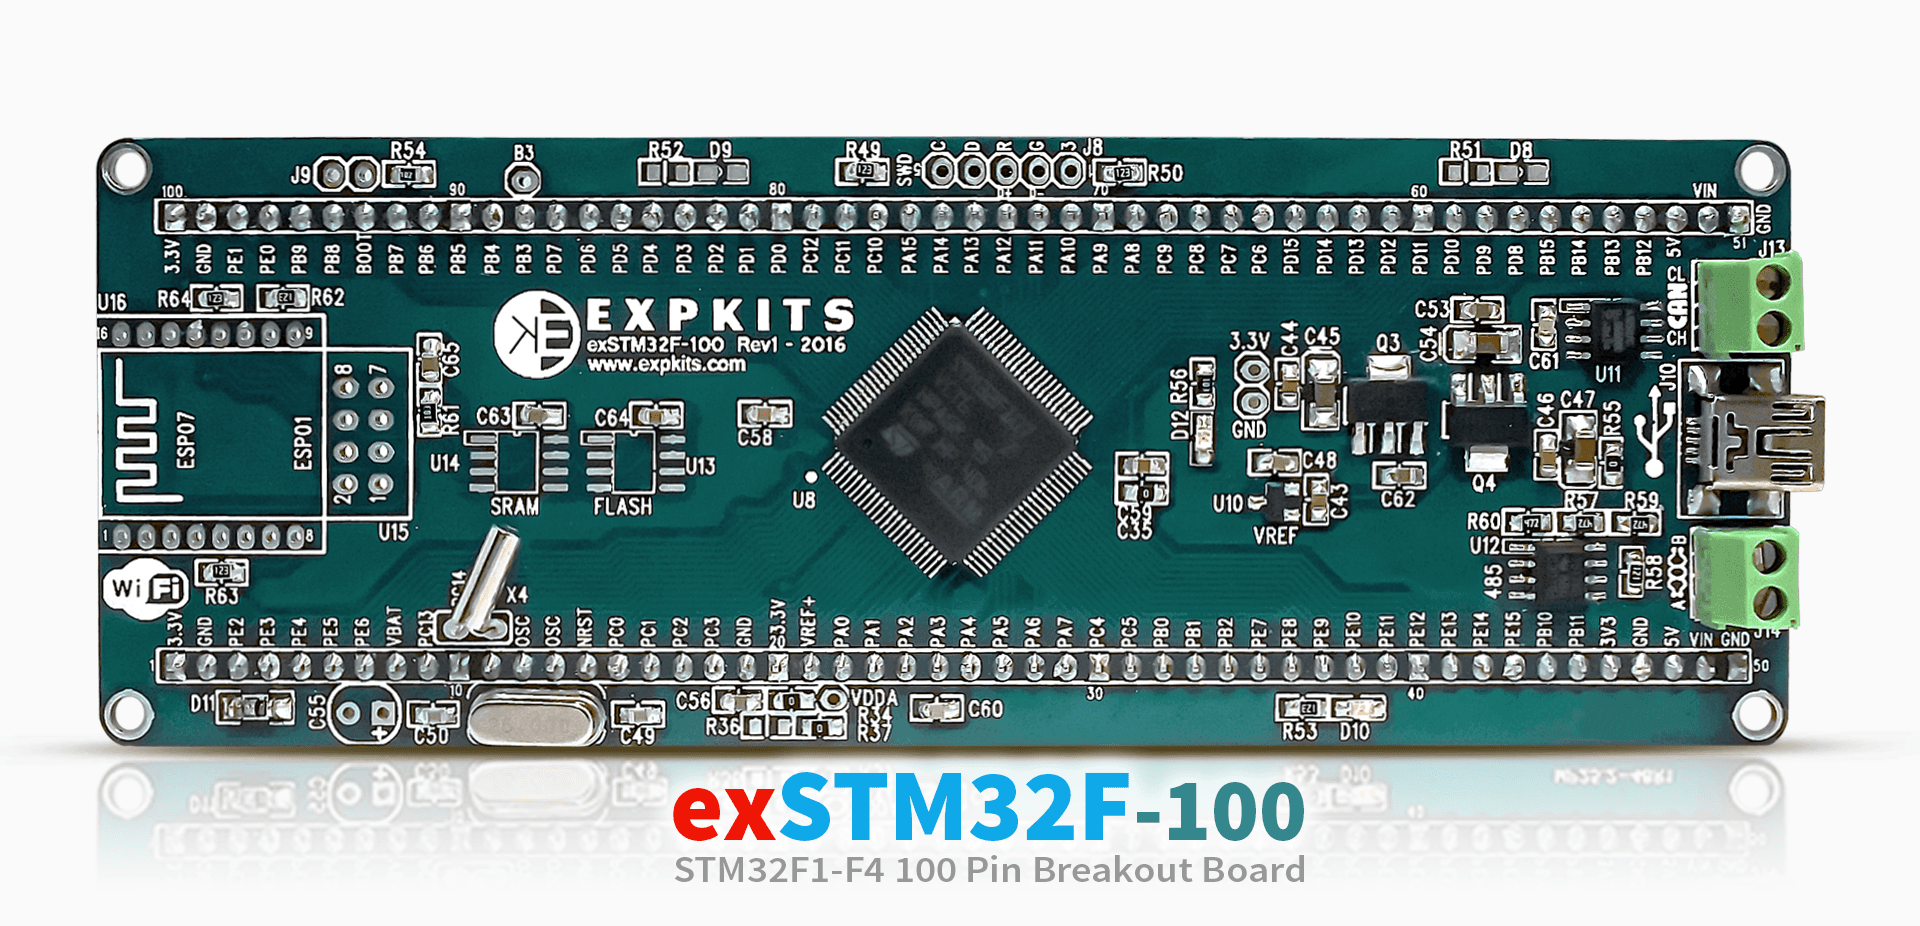 exSTM32F-100, STM32F103 ve STM32F405 MCU Development Board